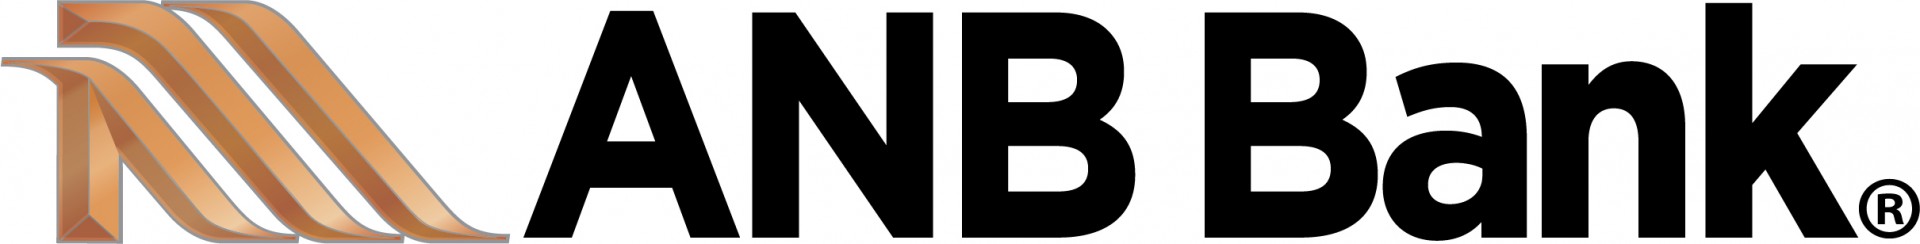 ANB-Bank-logo-four-color-gradients_2019